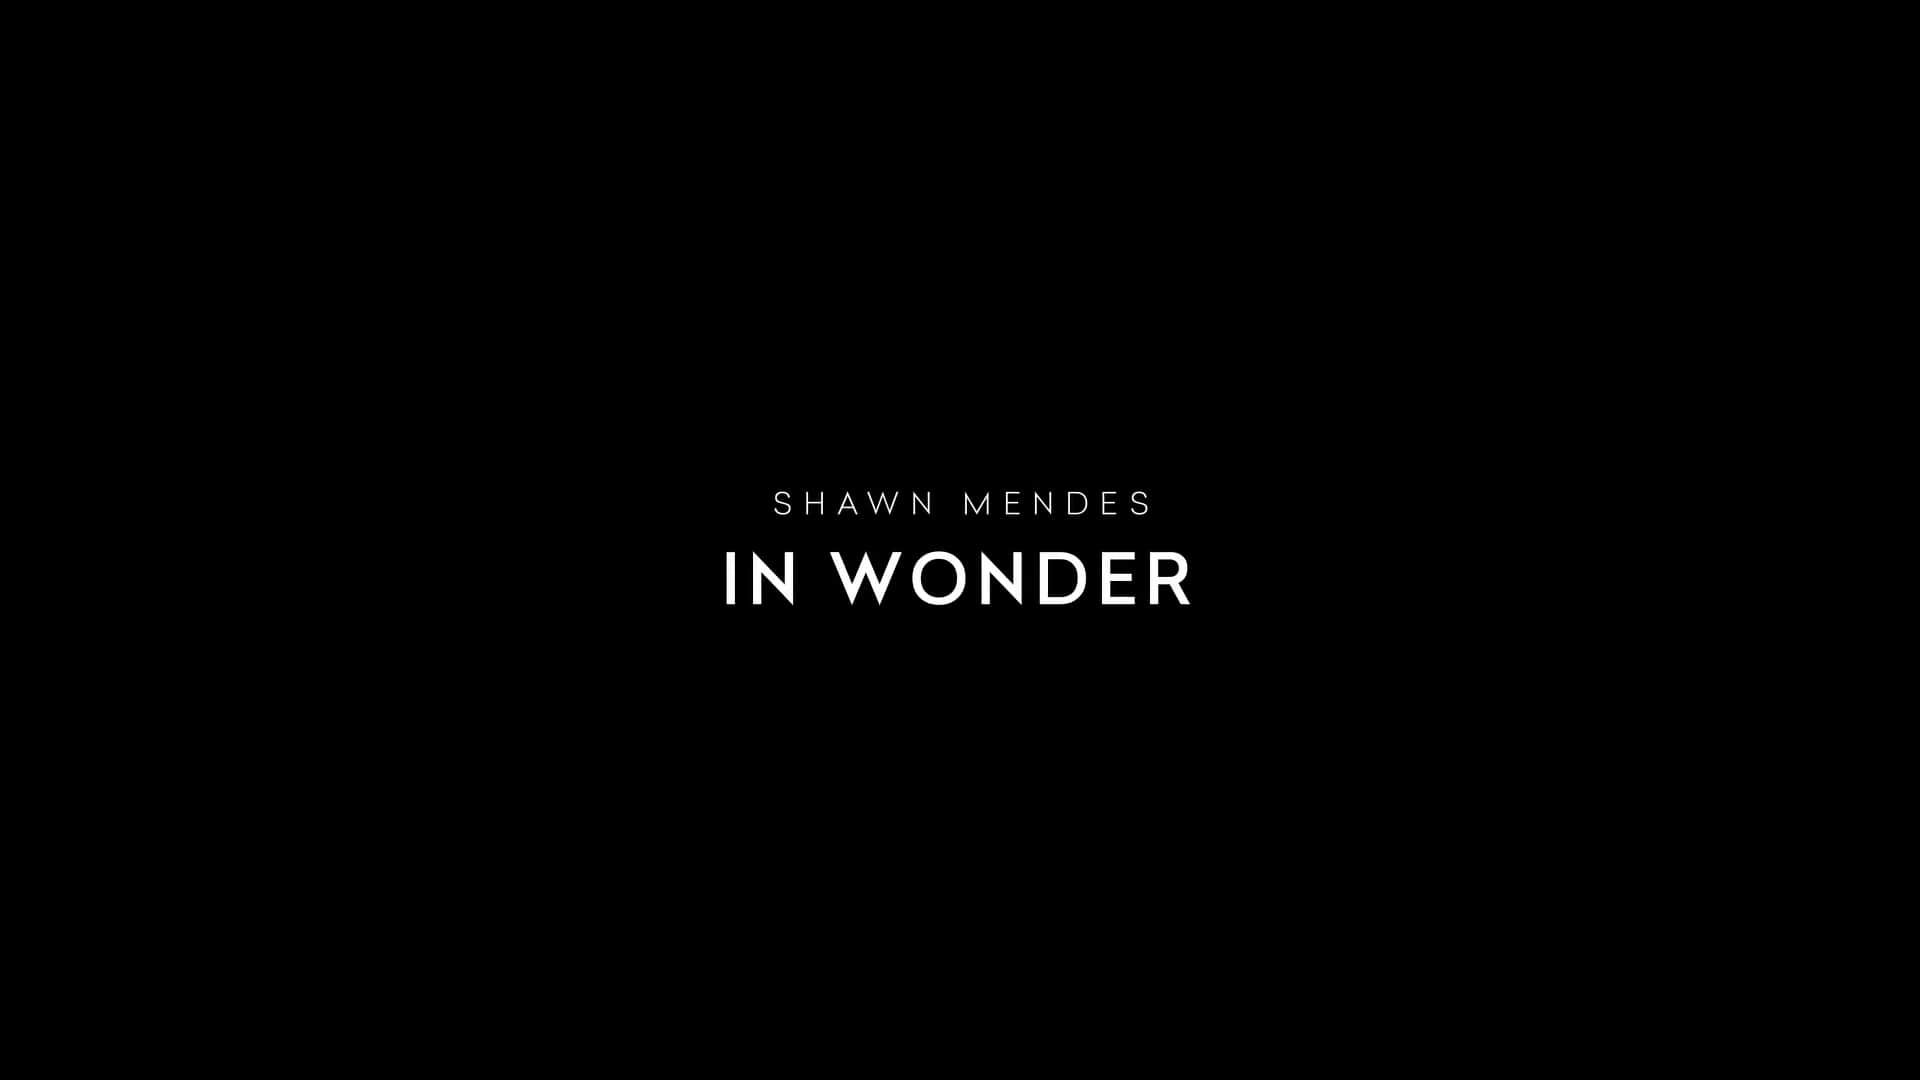 Netflix Shawn Mendes In Wonder Trailer, Netflix Documentary, Netflix Music Specials, Coming to Netflix in November 2020